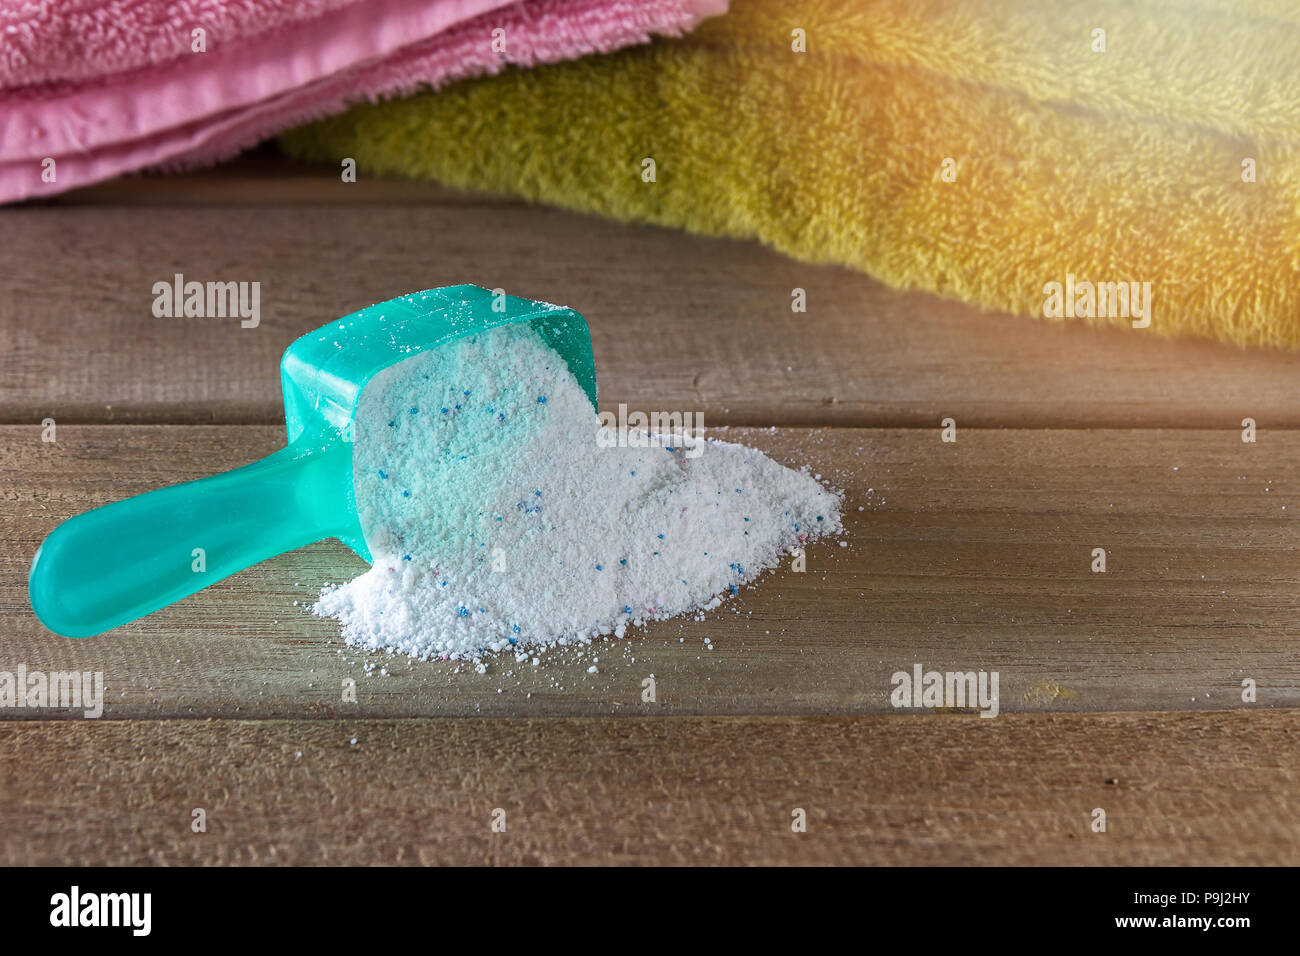 https://c8.alamy.com/comp/P9J2HY/detergent-or-washing-powder-in-measuring-spoon-P9J2HY.jpg